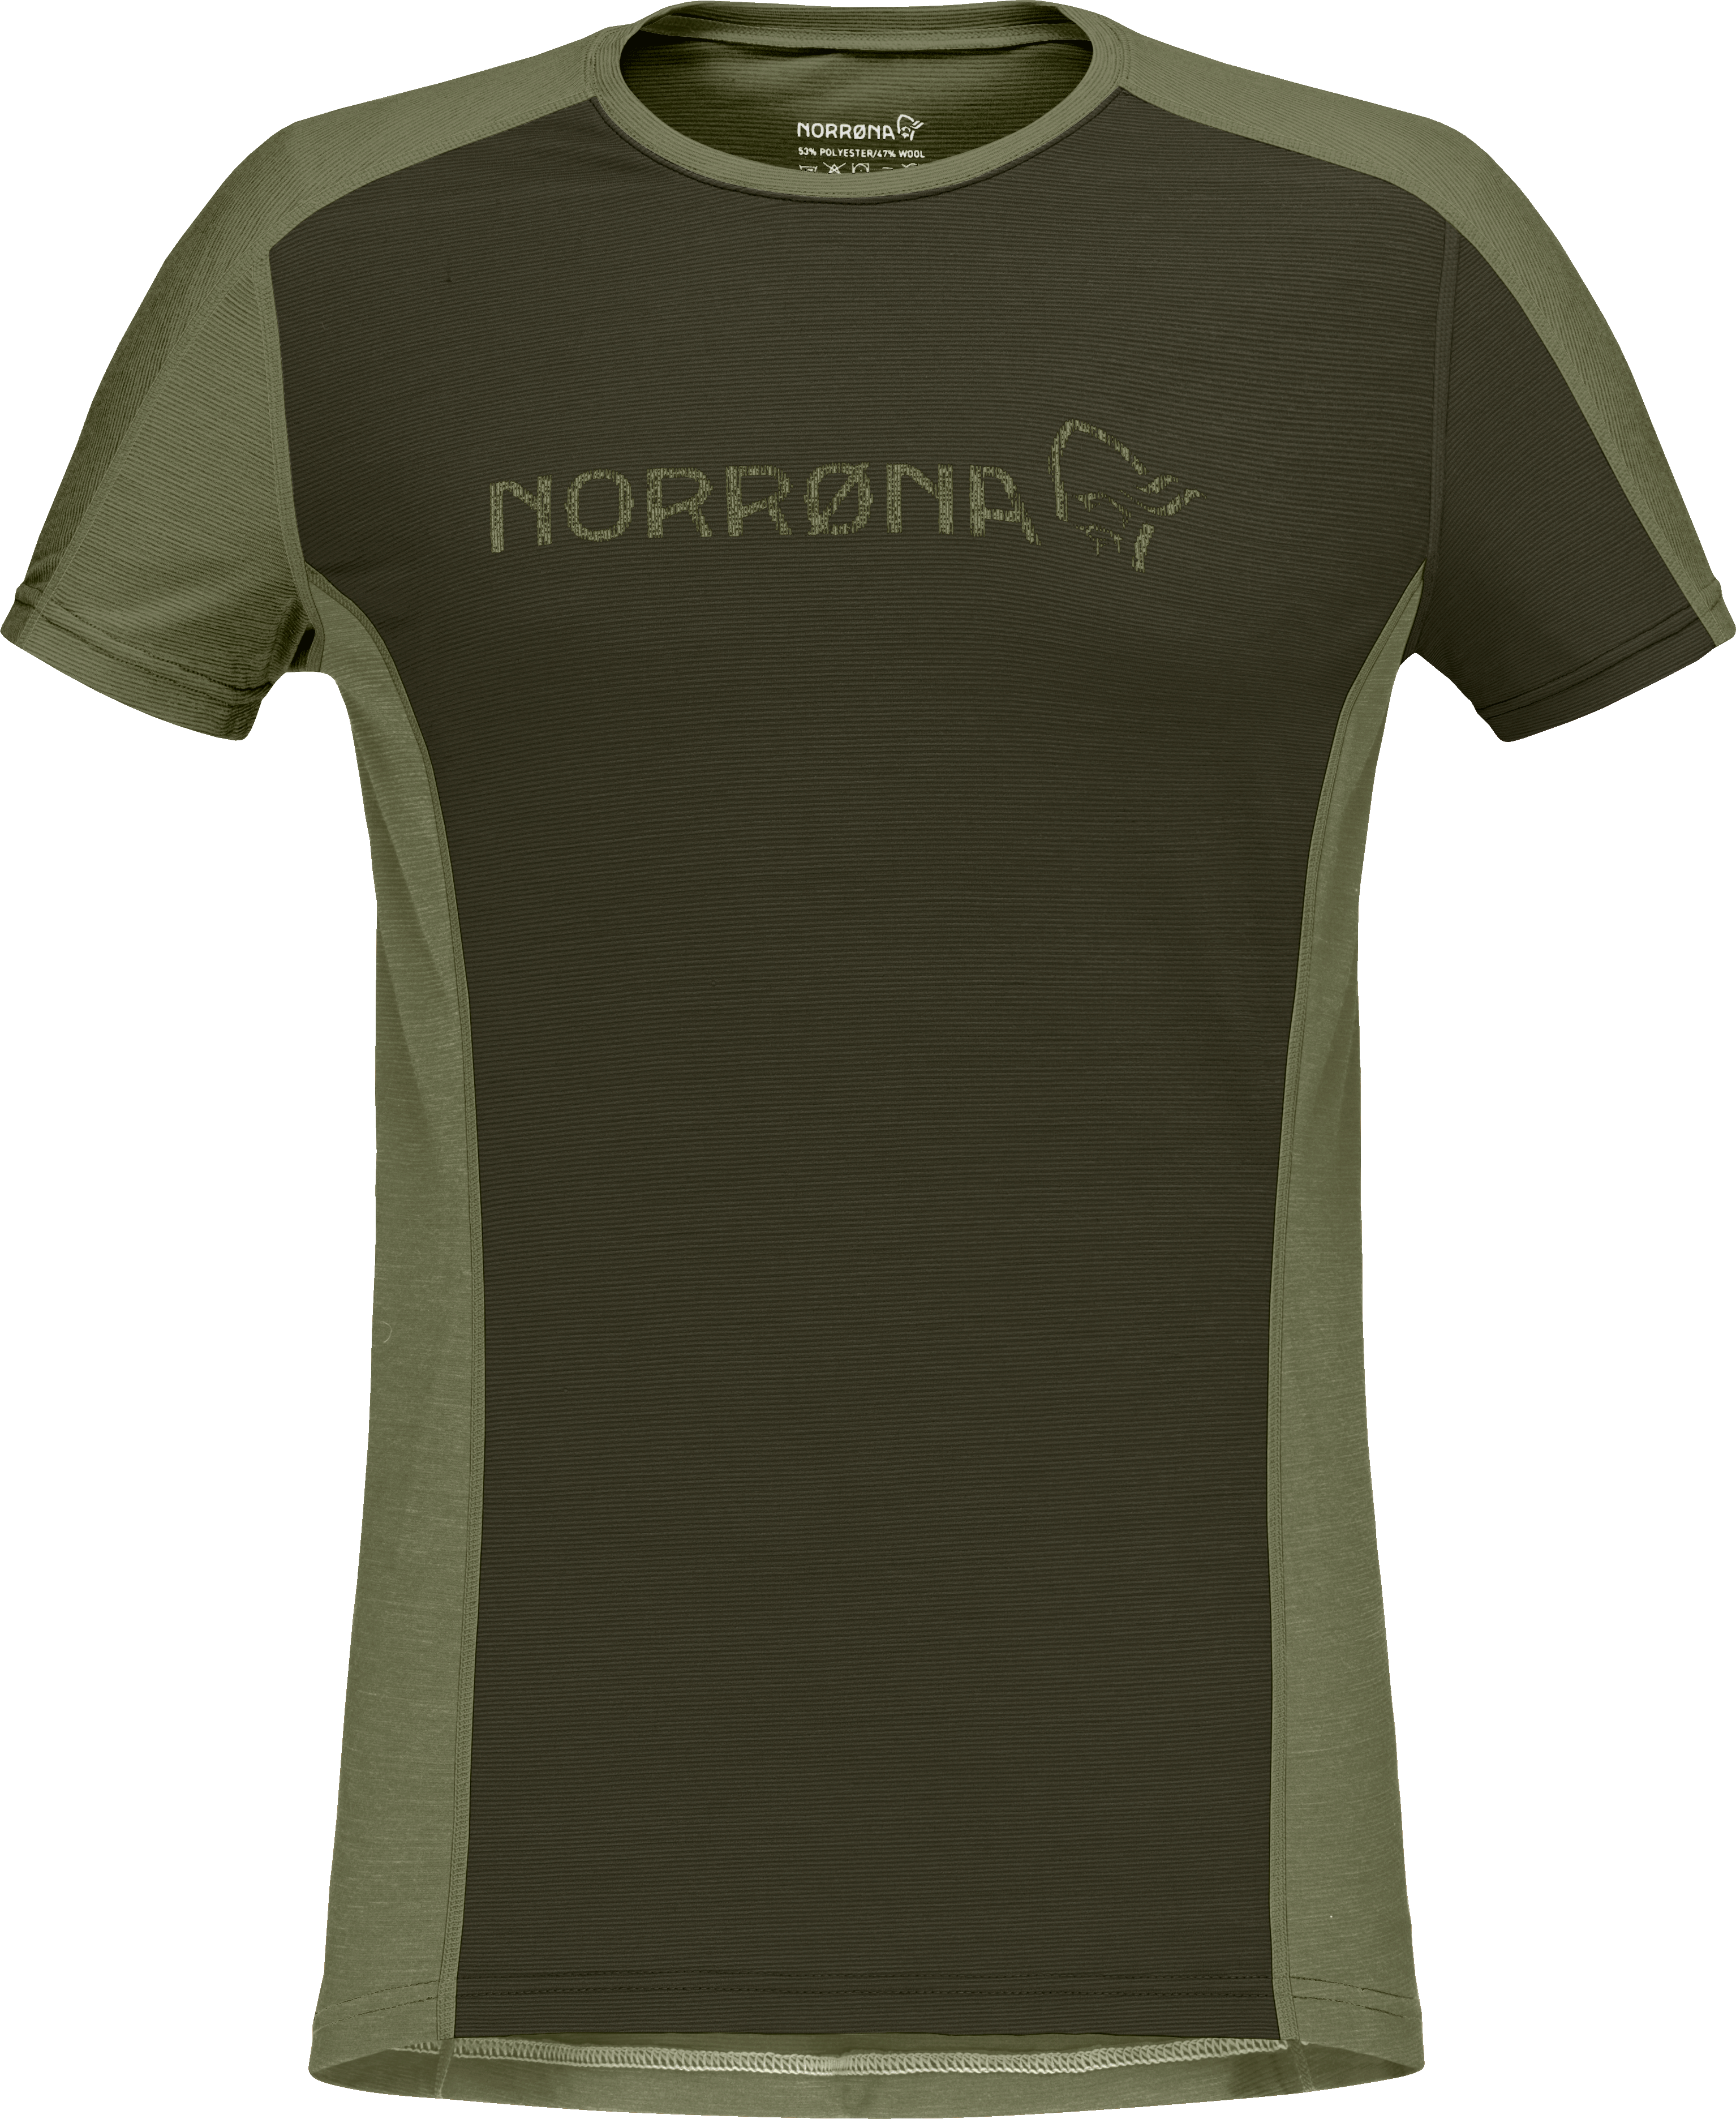 Norrøna Women’s Falketind Equaliser Merino T-Shirt Olive Night/Rosin